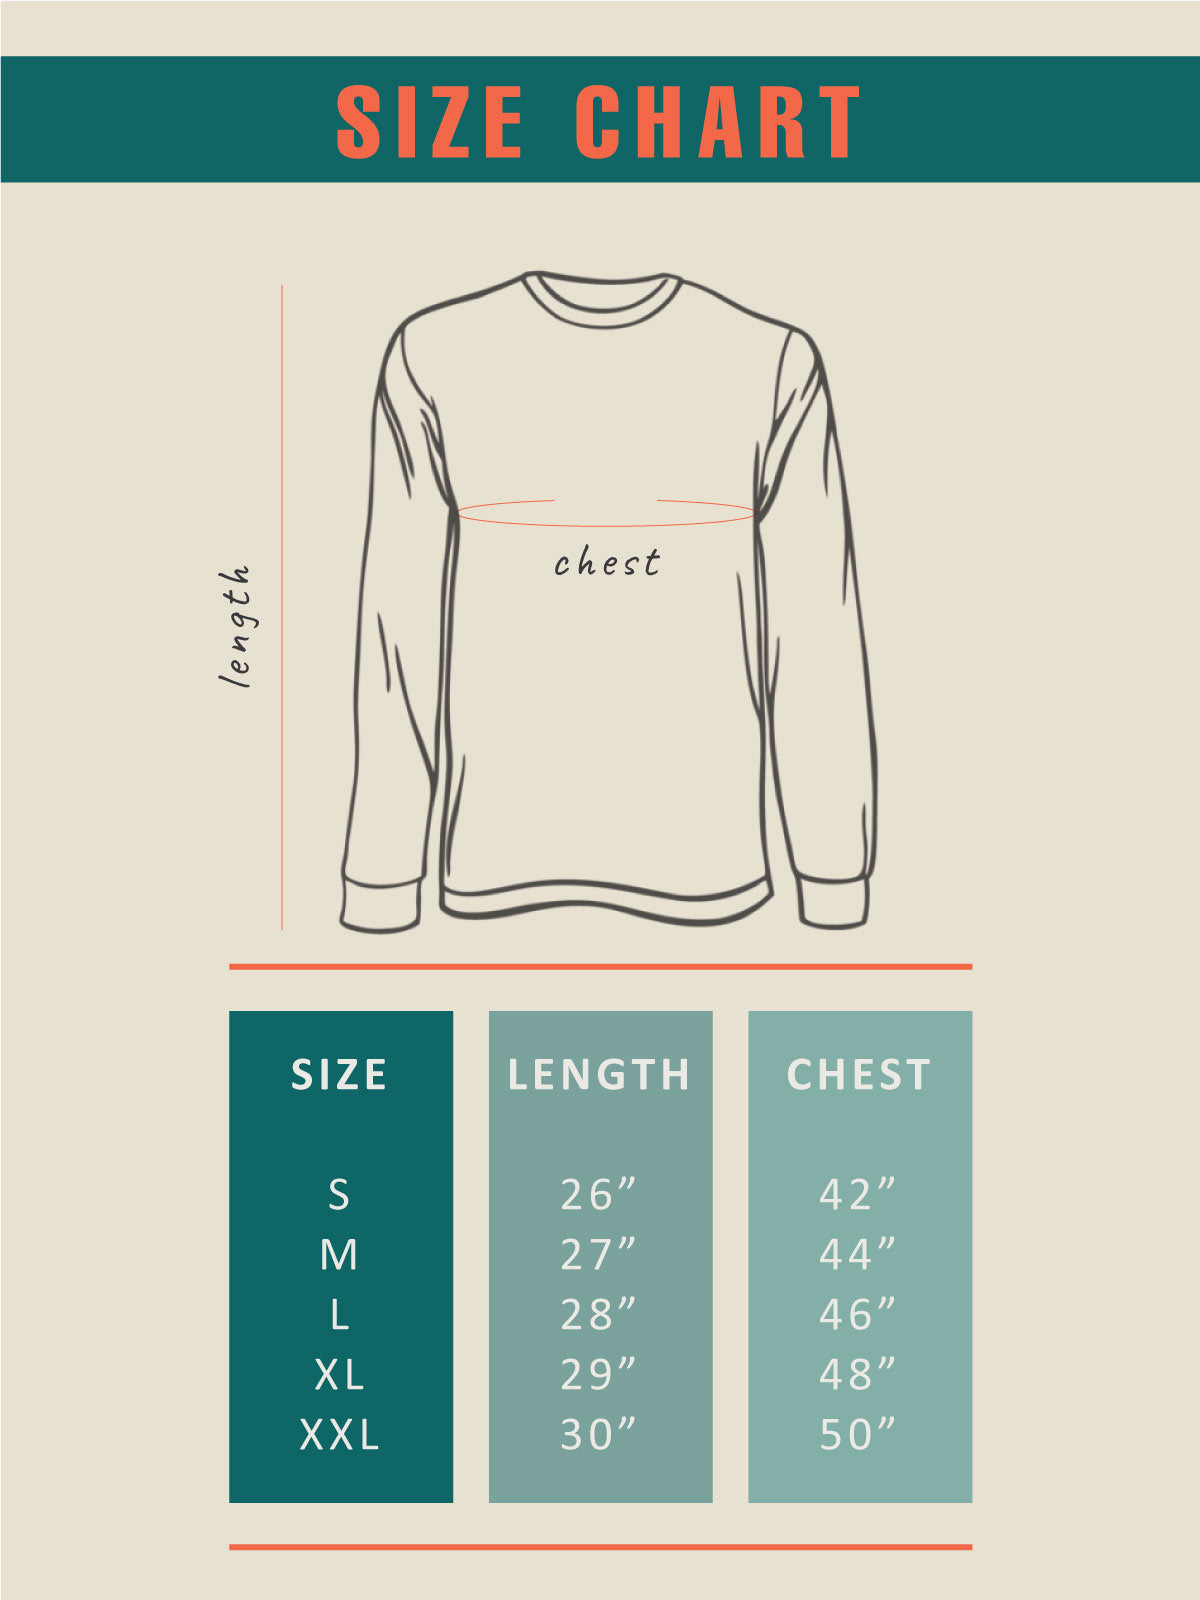 Just Flow With It | Back Printed Unisex Sweatshirt